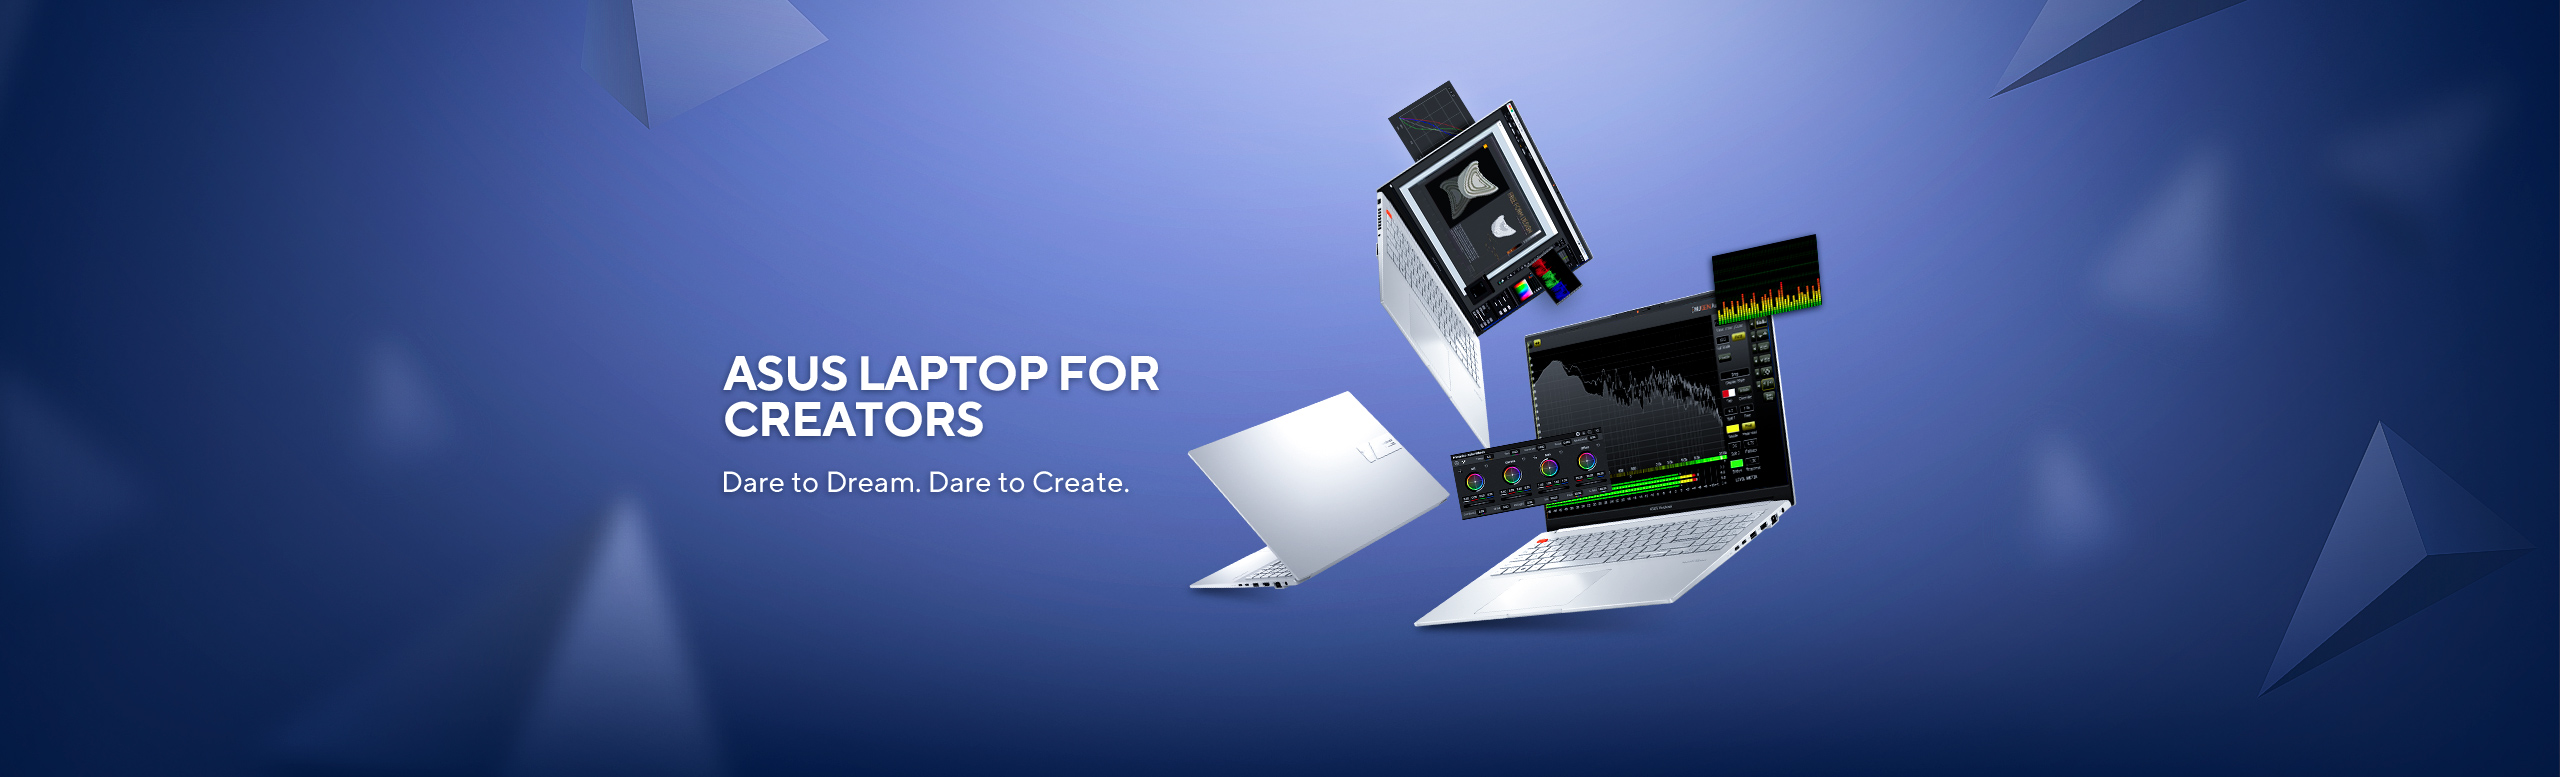 Laptops for creators